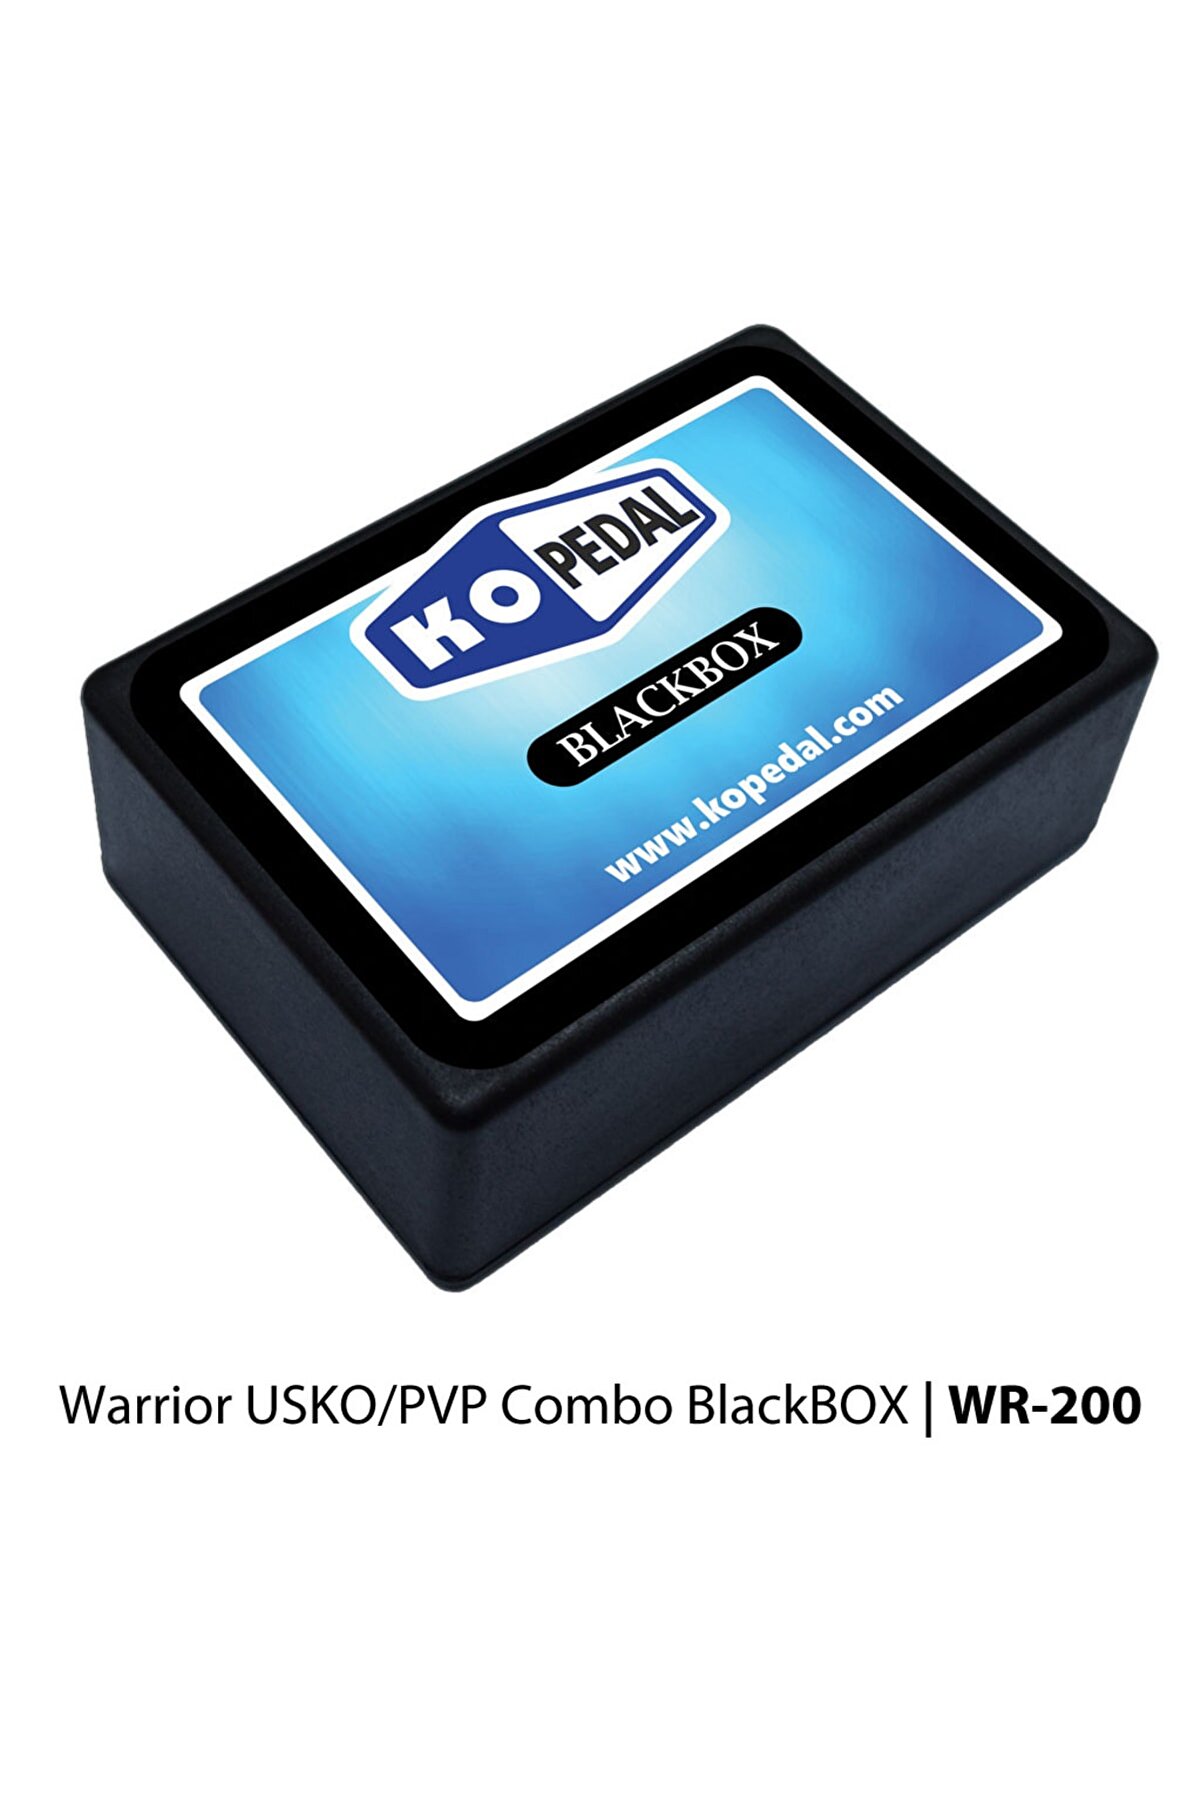 kopedal Warrior Usko/pvp Combo Blackbox